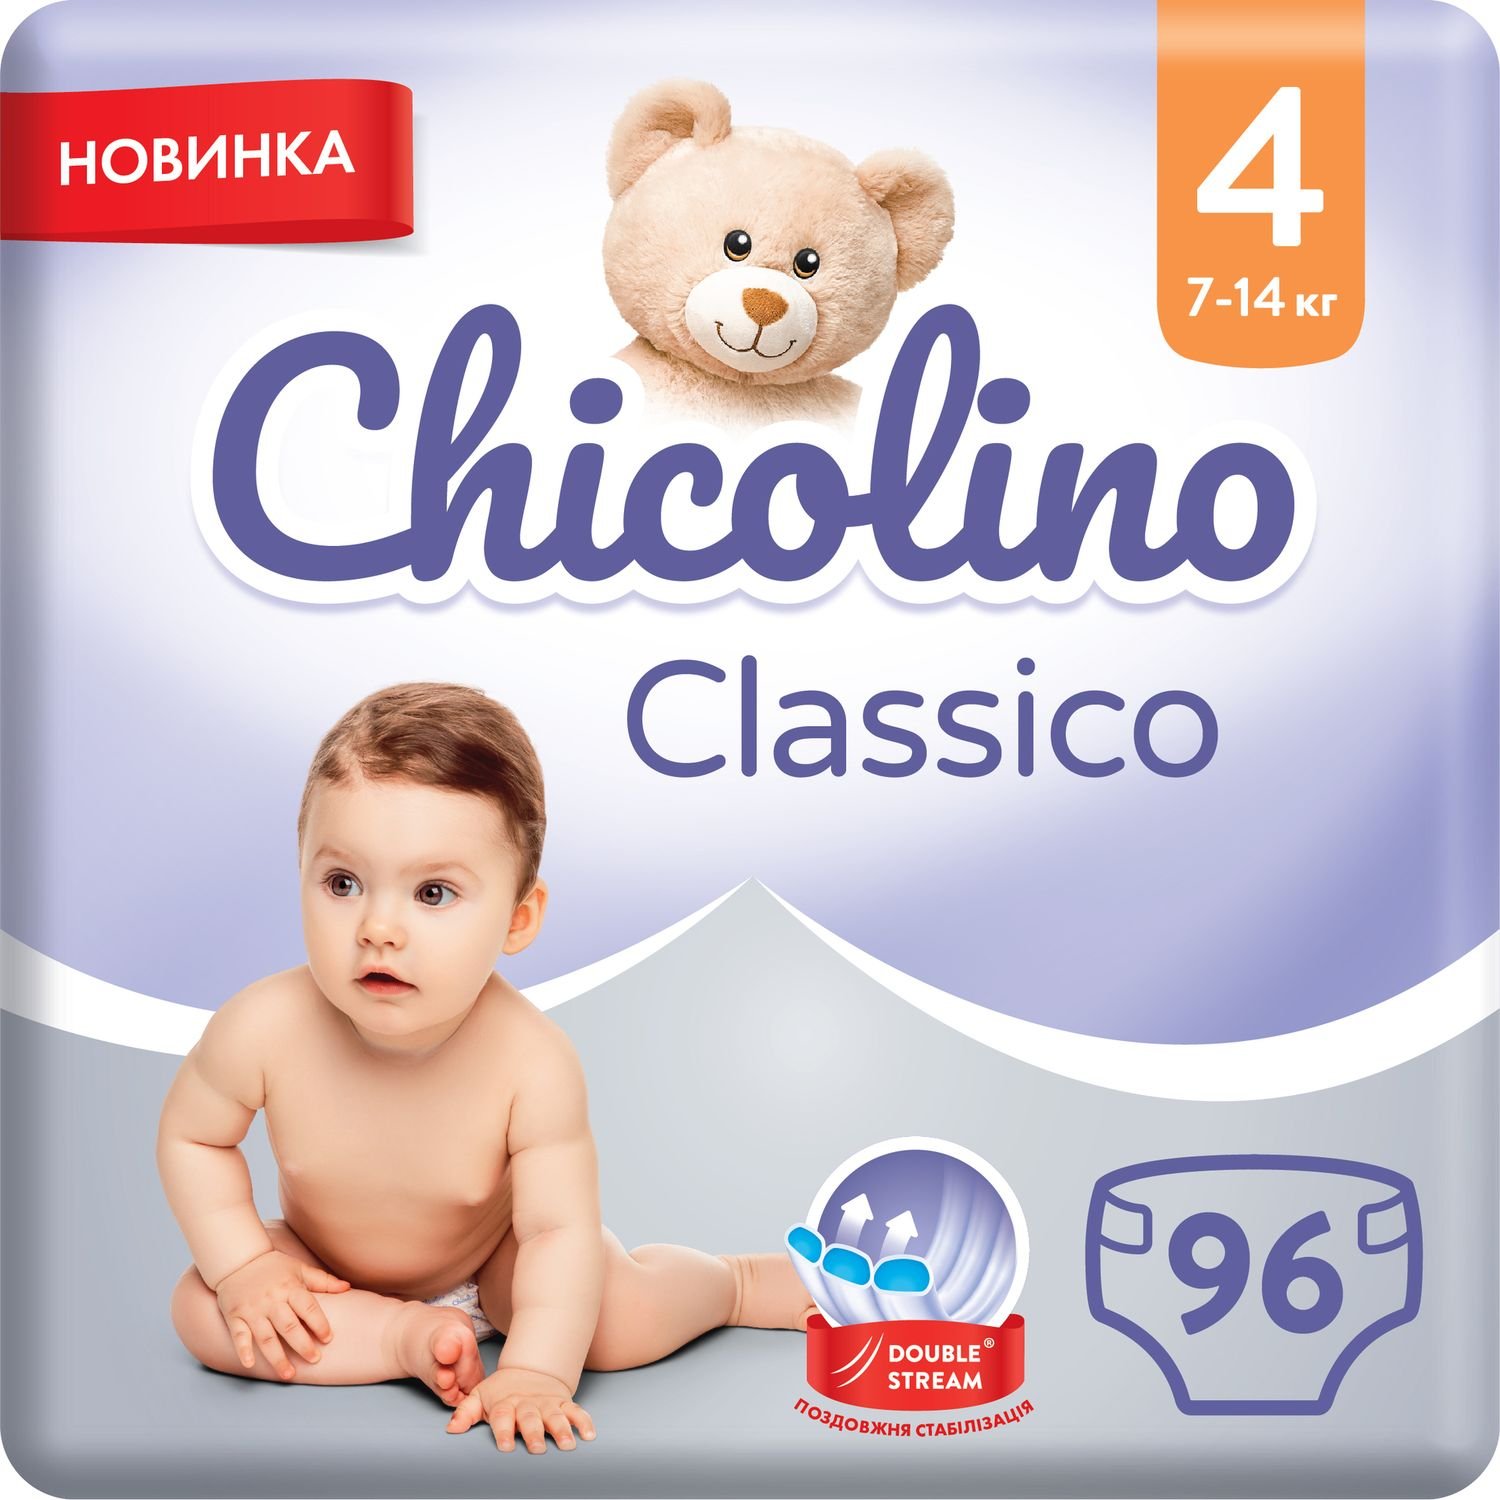 Набор подгузников Chicolino Classico 4 (7-14 кг), 96 шт. (2 уп. по 48 шт.) - фото 1